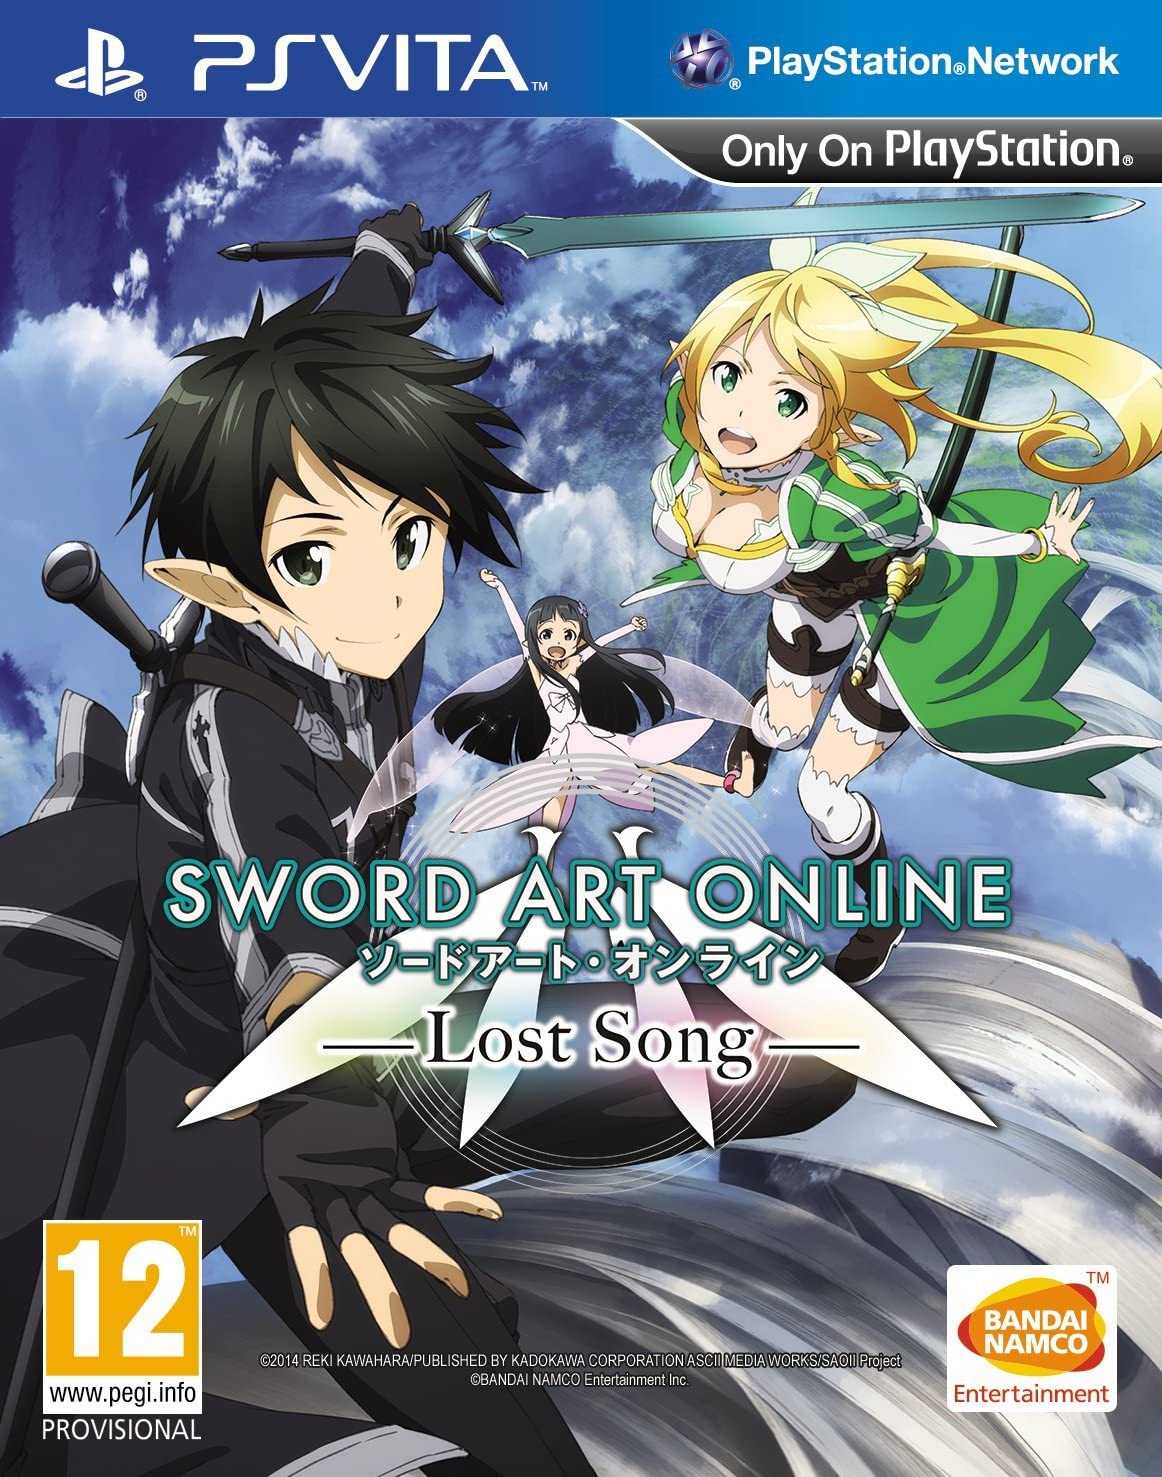 Sword ART Online PlayStation Vita by Bandai